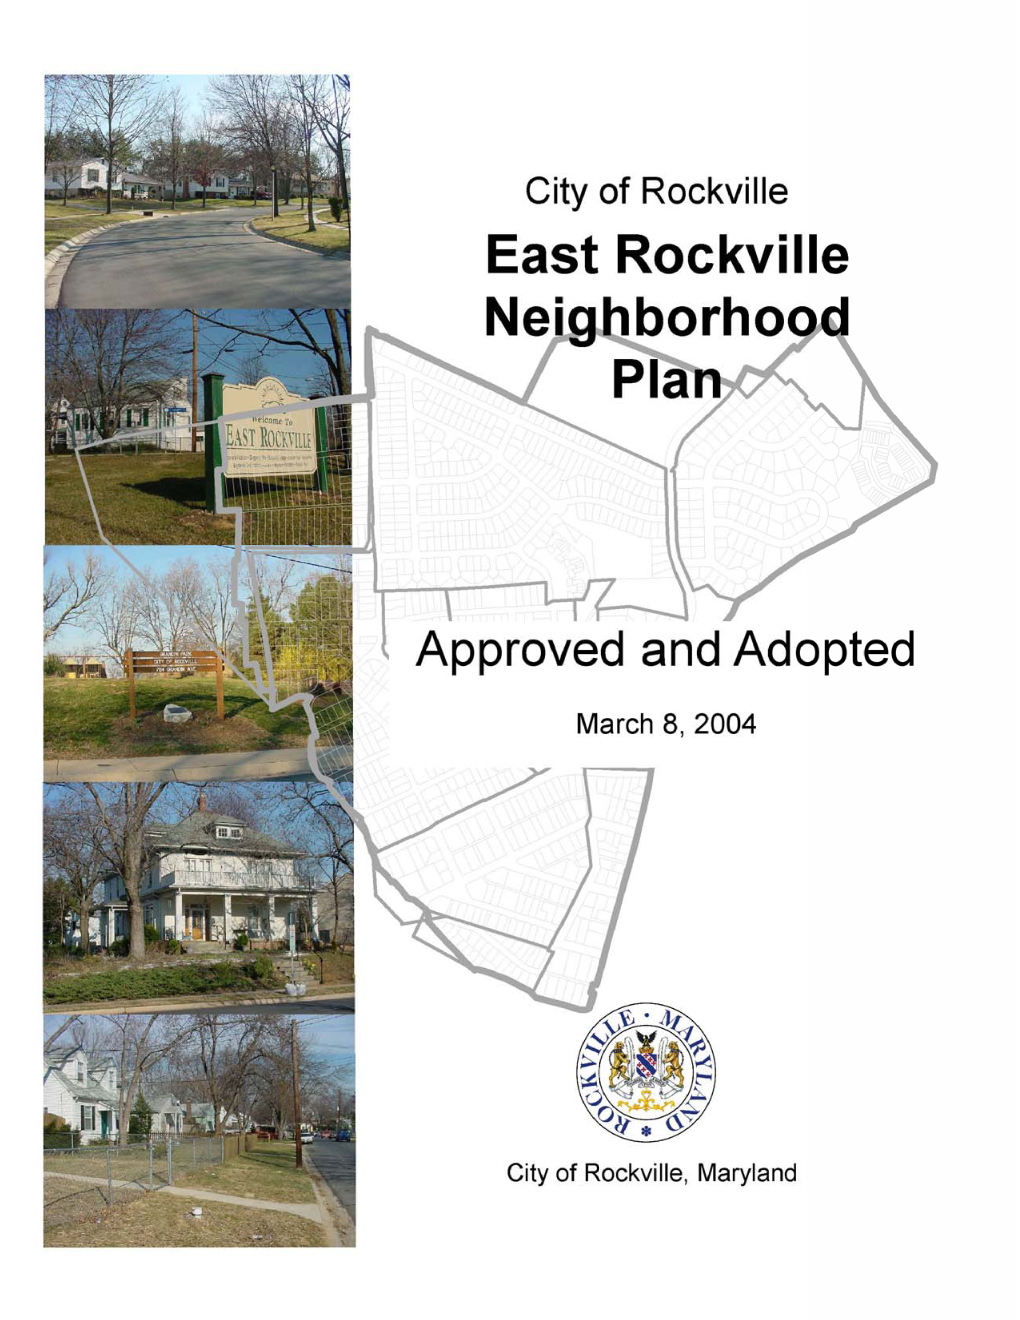 2004 East Rockville Neighborhood Plan